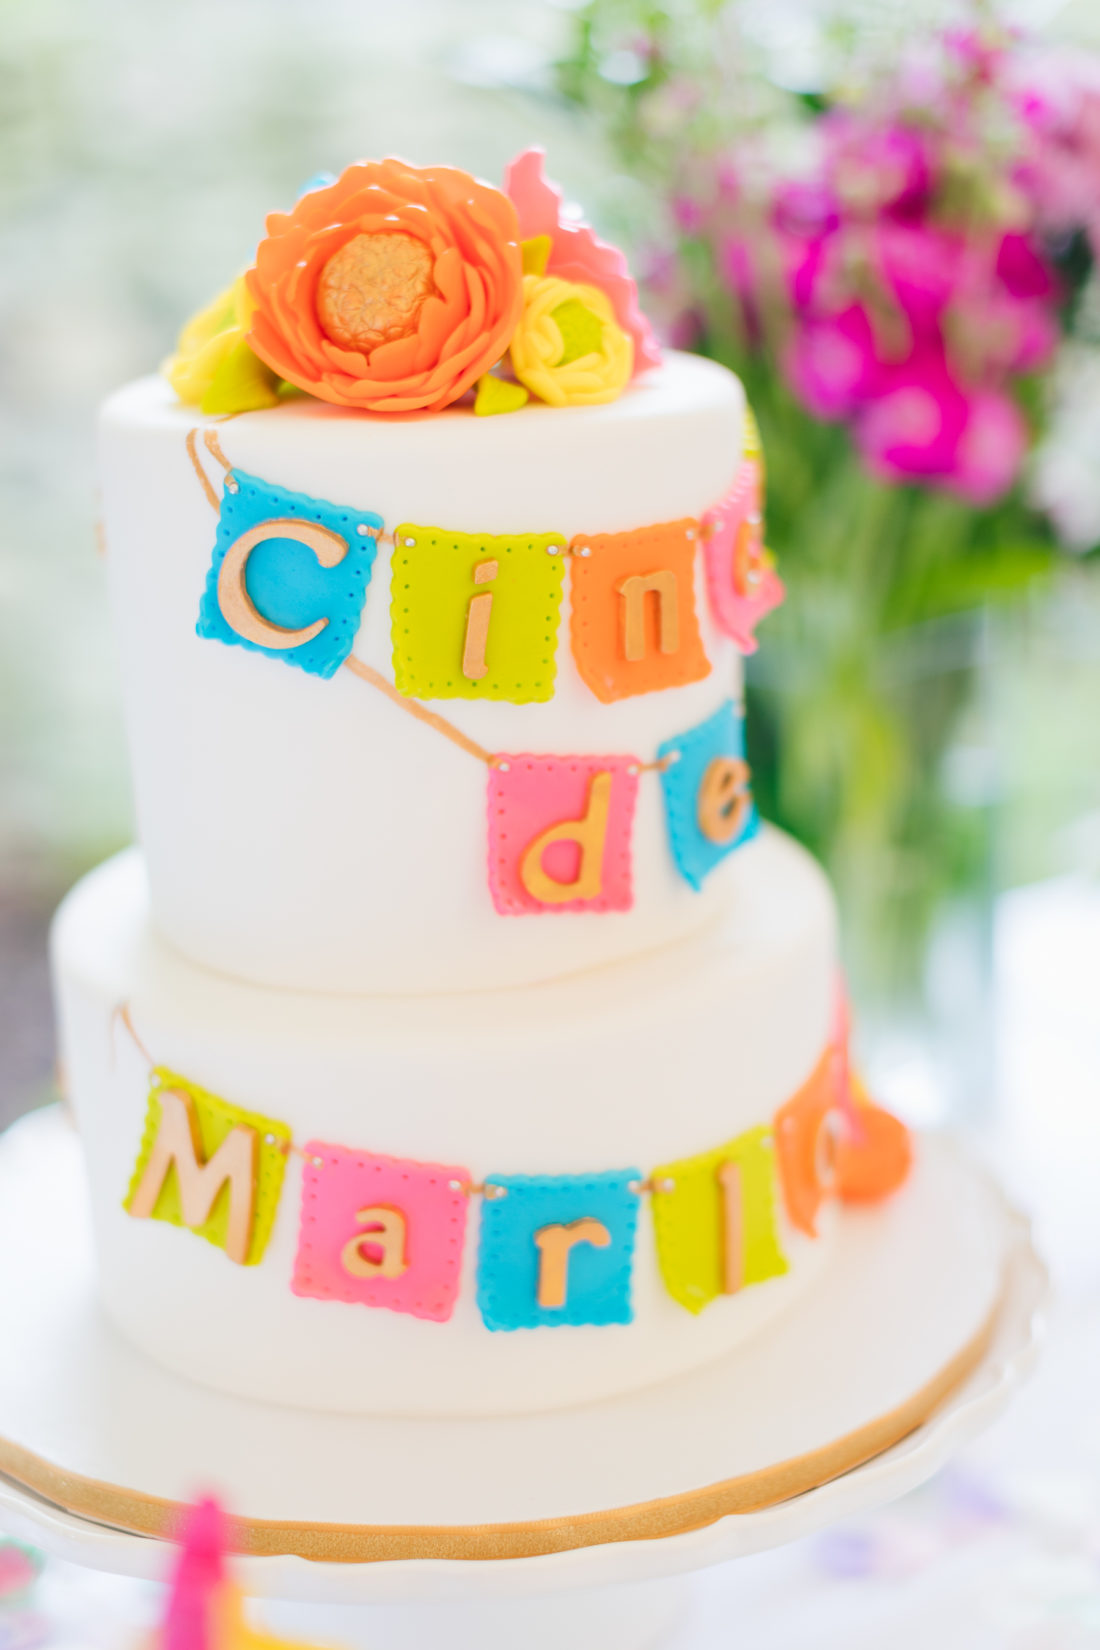 Marlowe Martino's Cinco de Marlowe themed 5th birthday cake